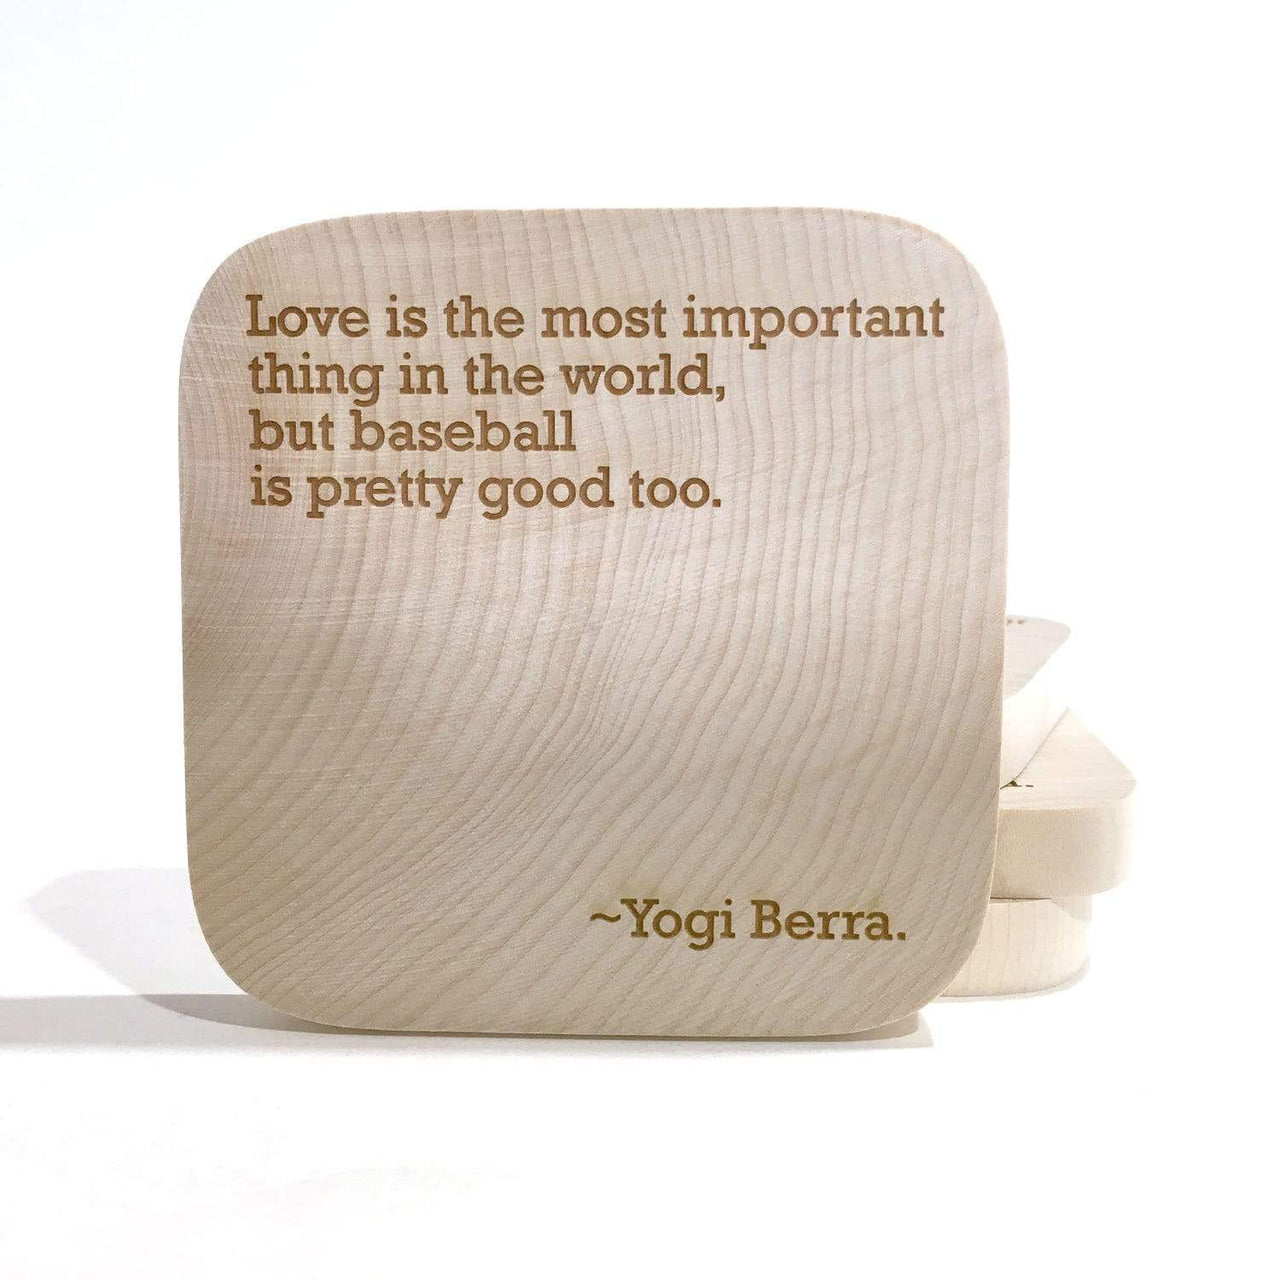 The Wood Bat Factory Novelties Yogi Berra Quote Coaster Set